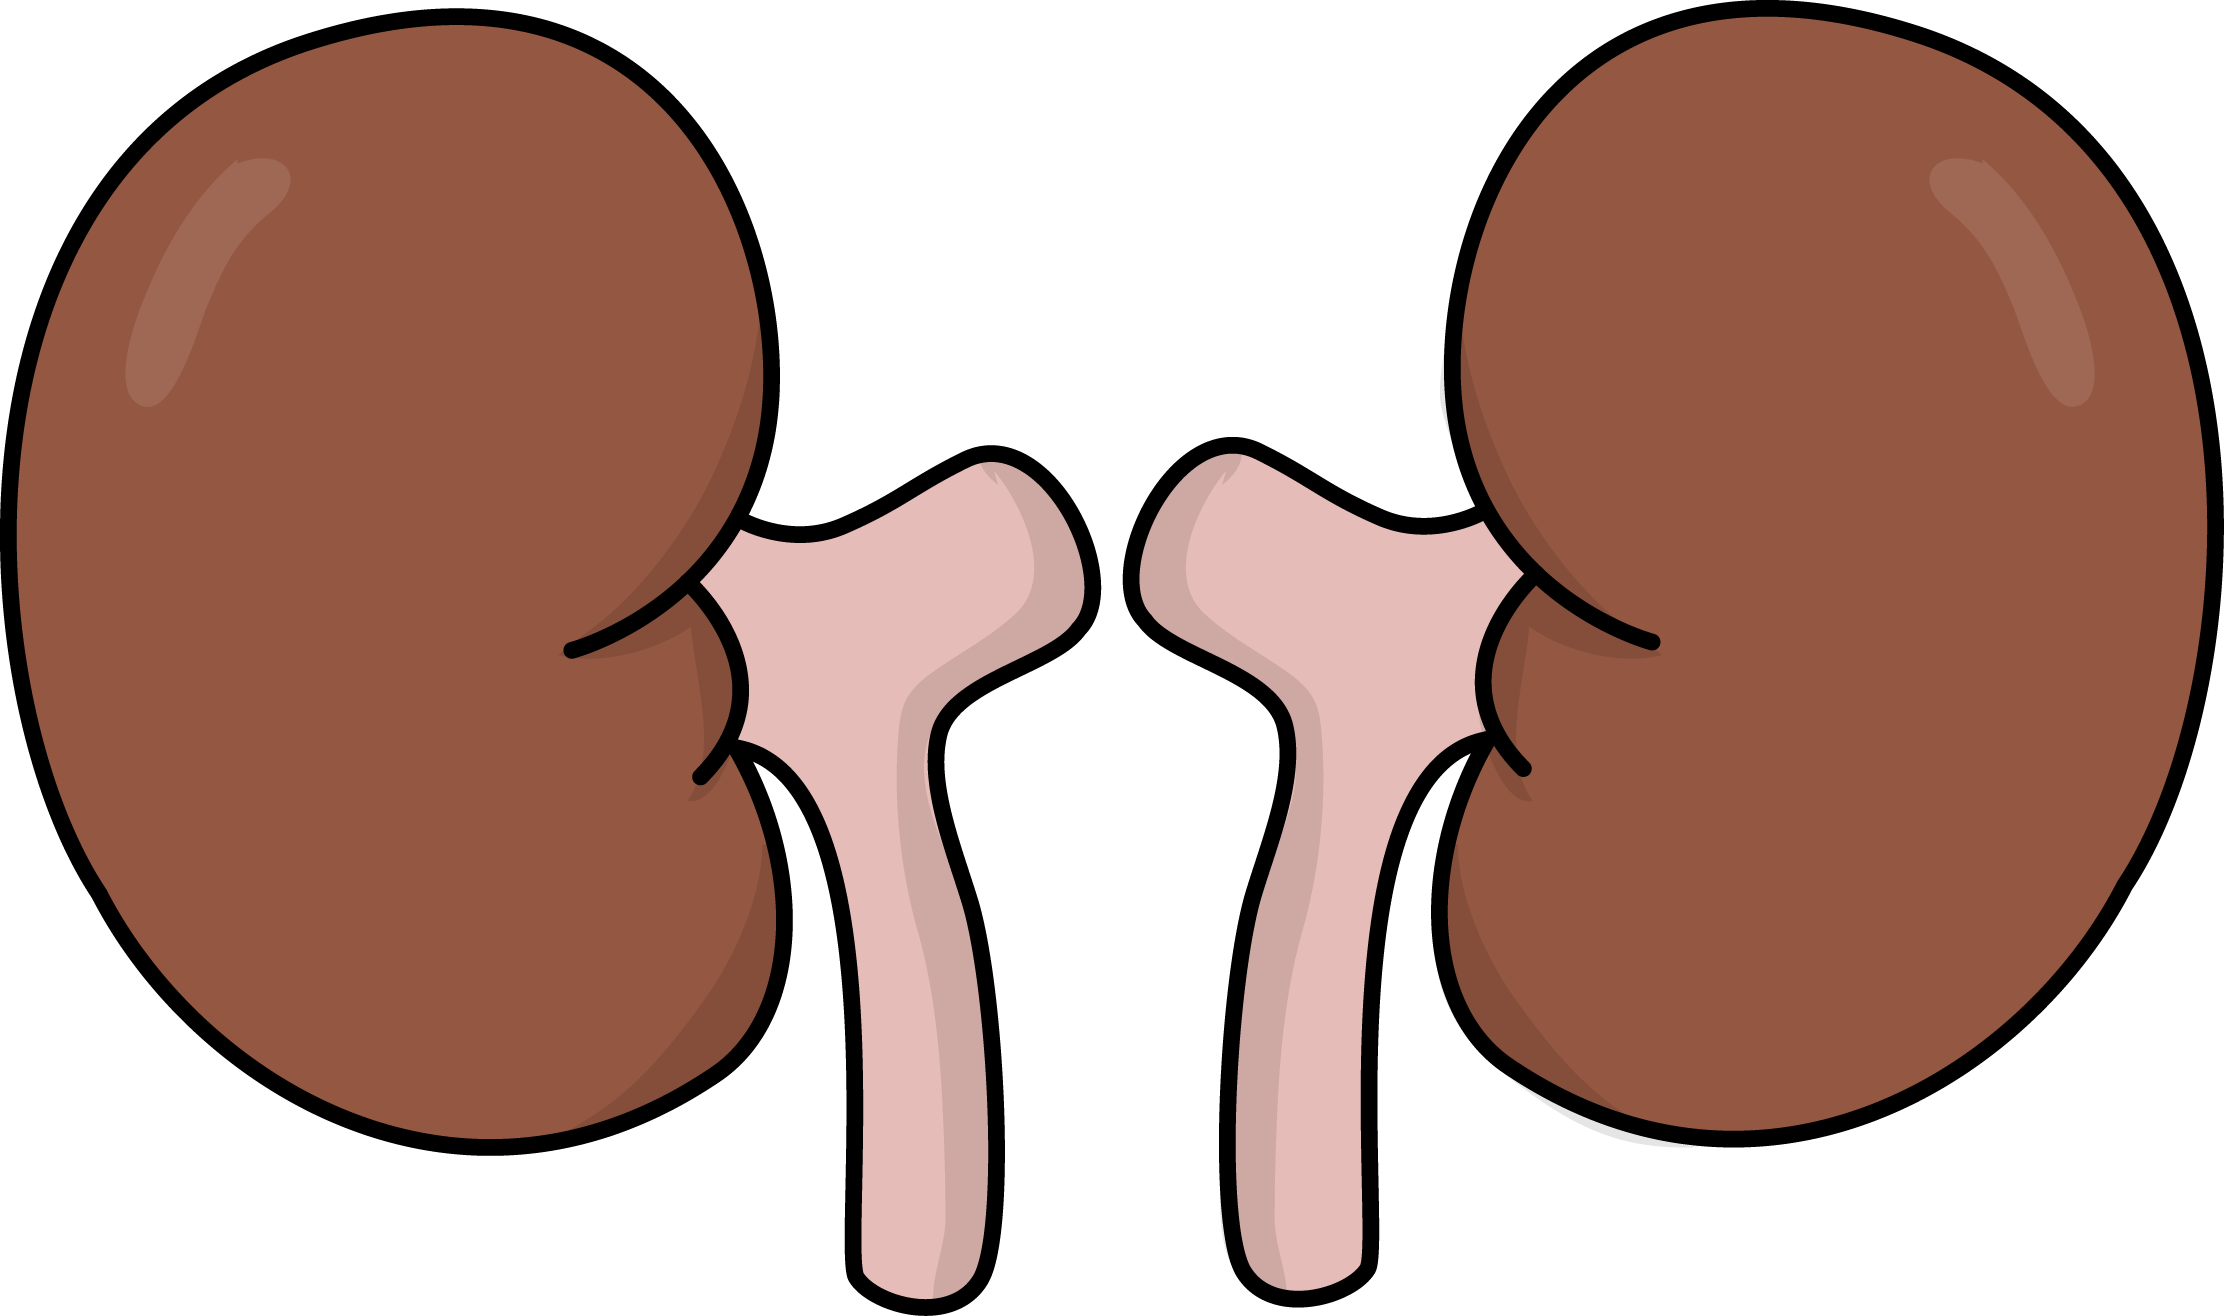 kidneys images - usseek.com